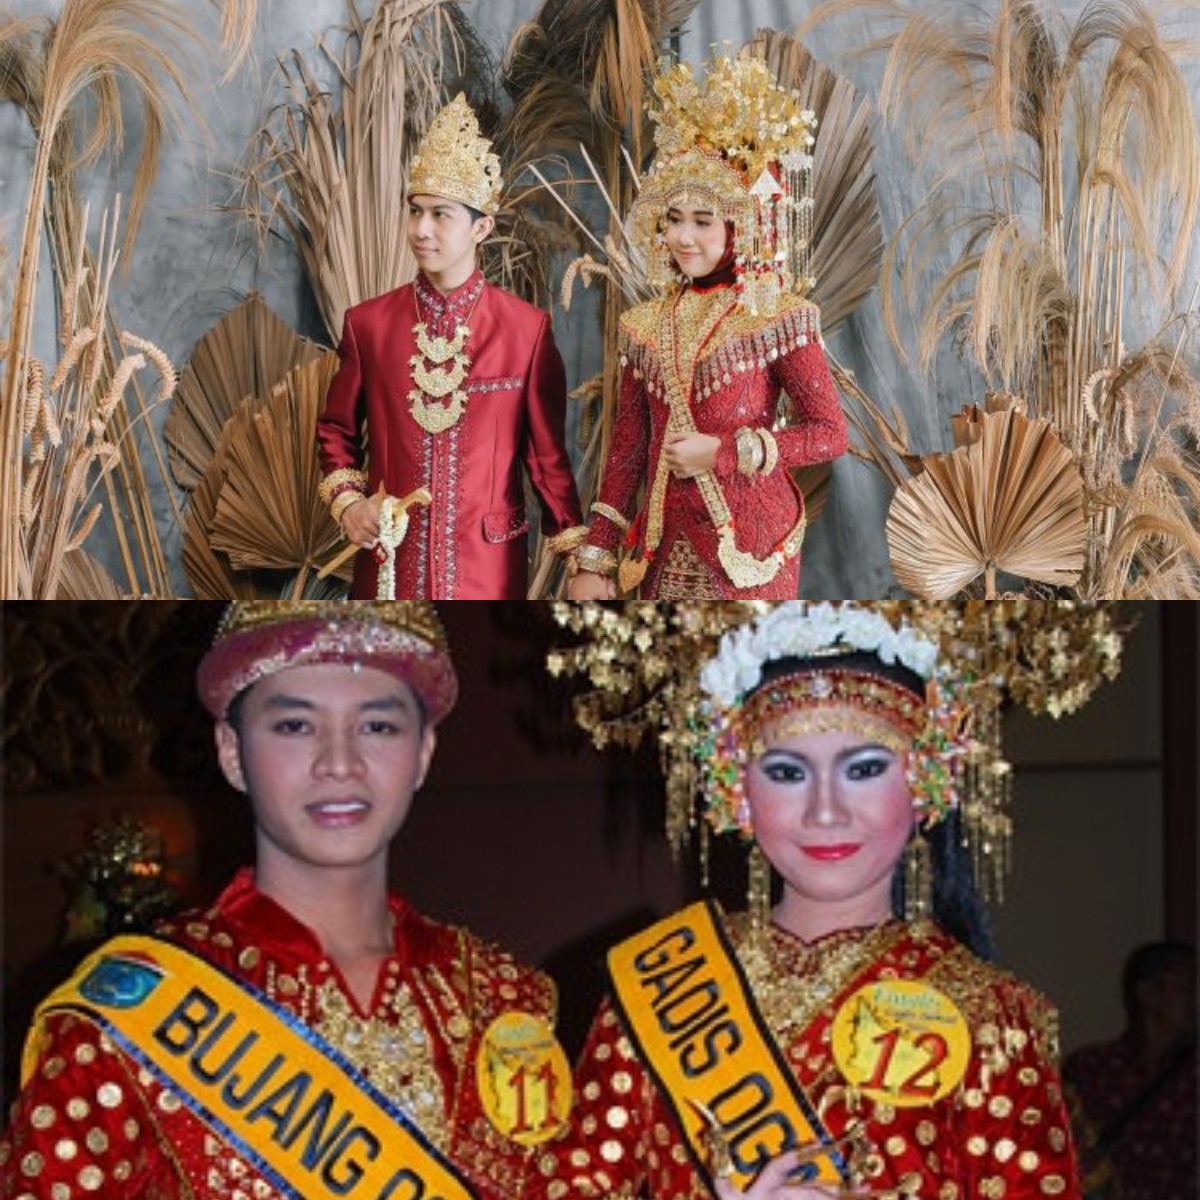 Identitas Daerah! Inilah 5 Jenis Pakaian Adat Khas Sumatera Selatan yang Miliki Makna dan Filosopi Kebudayaan 